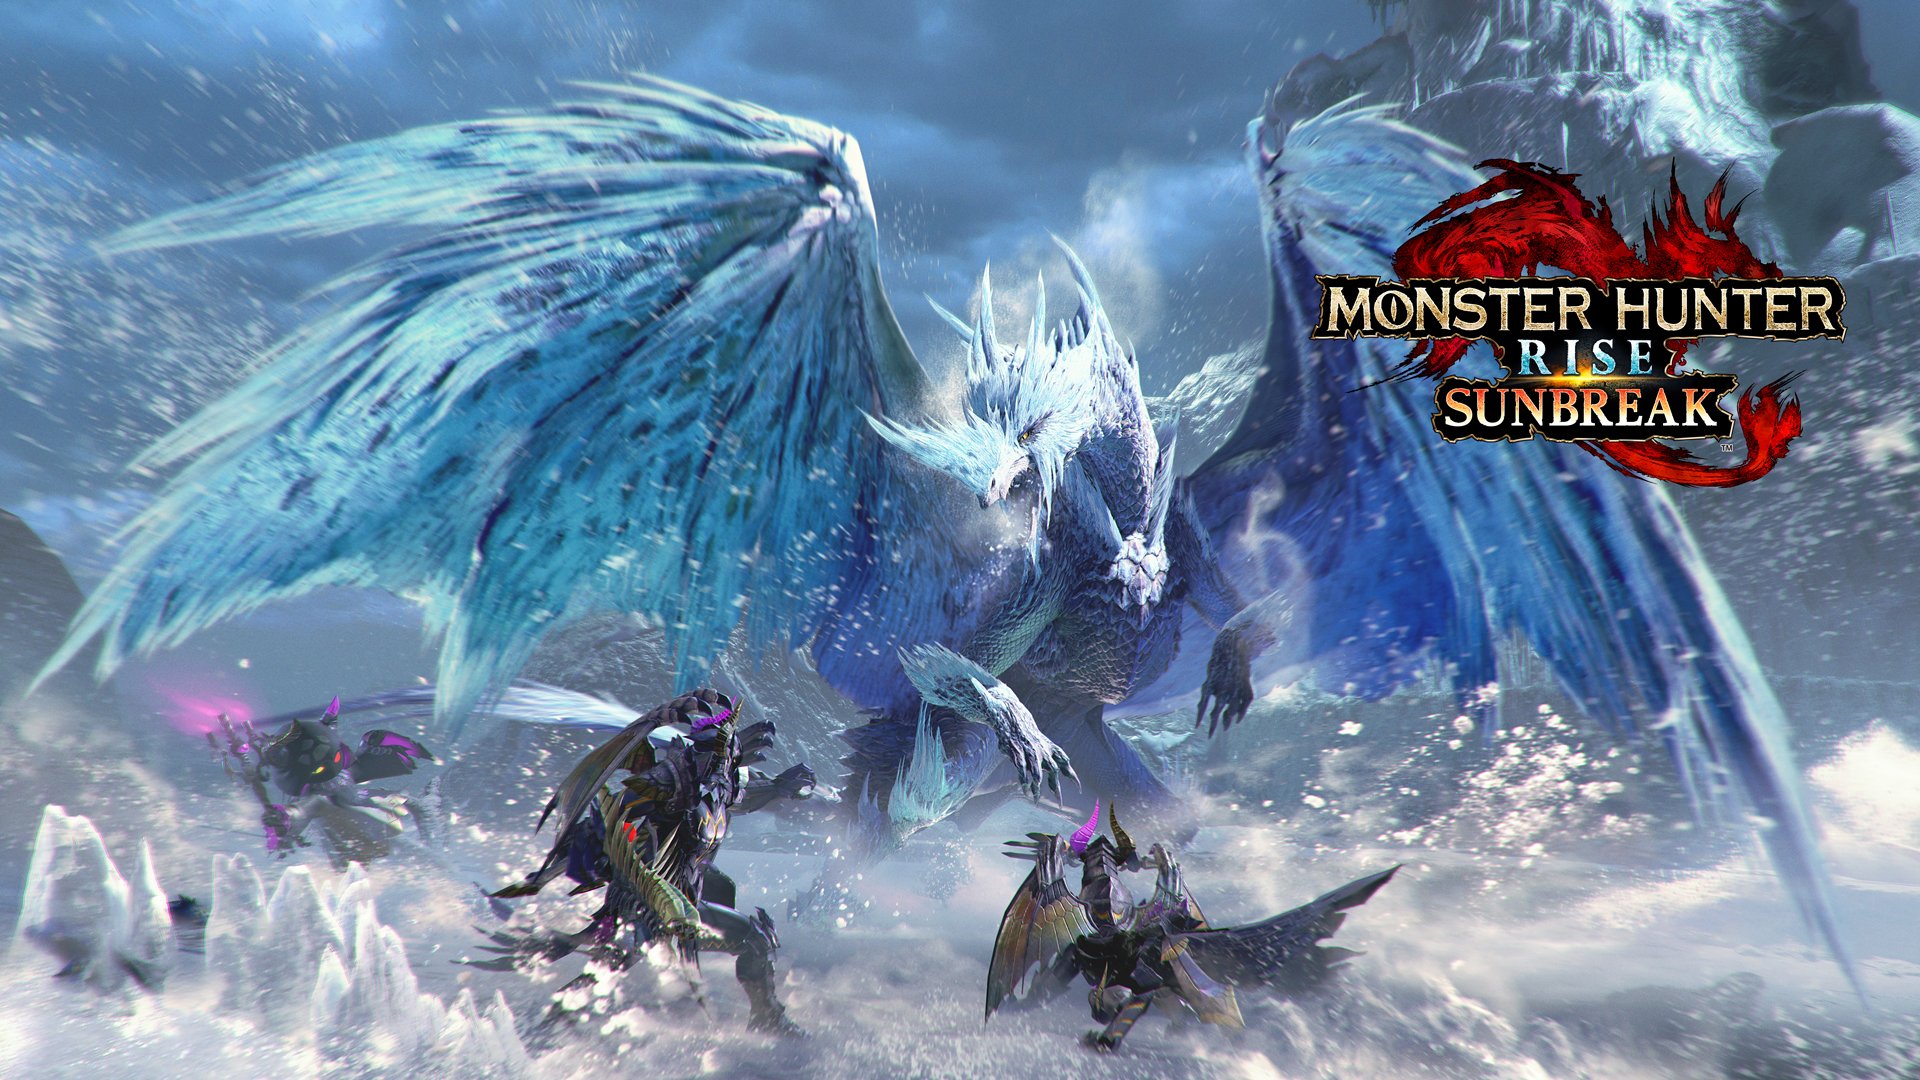 Monster Hunter Rise: Sunbreak expansion Title Update 4 launches February 7  - Gematsu